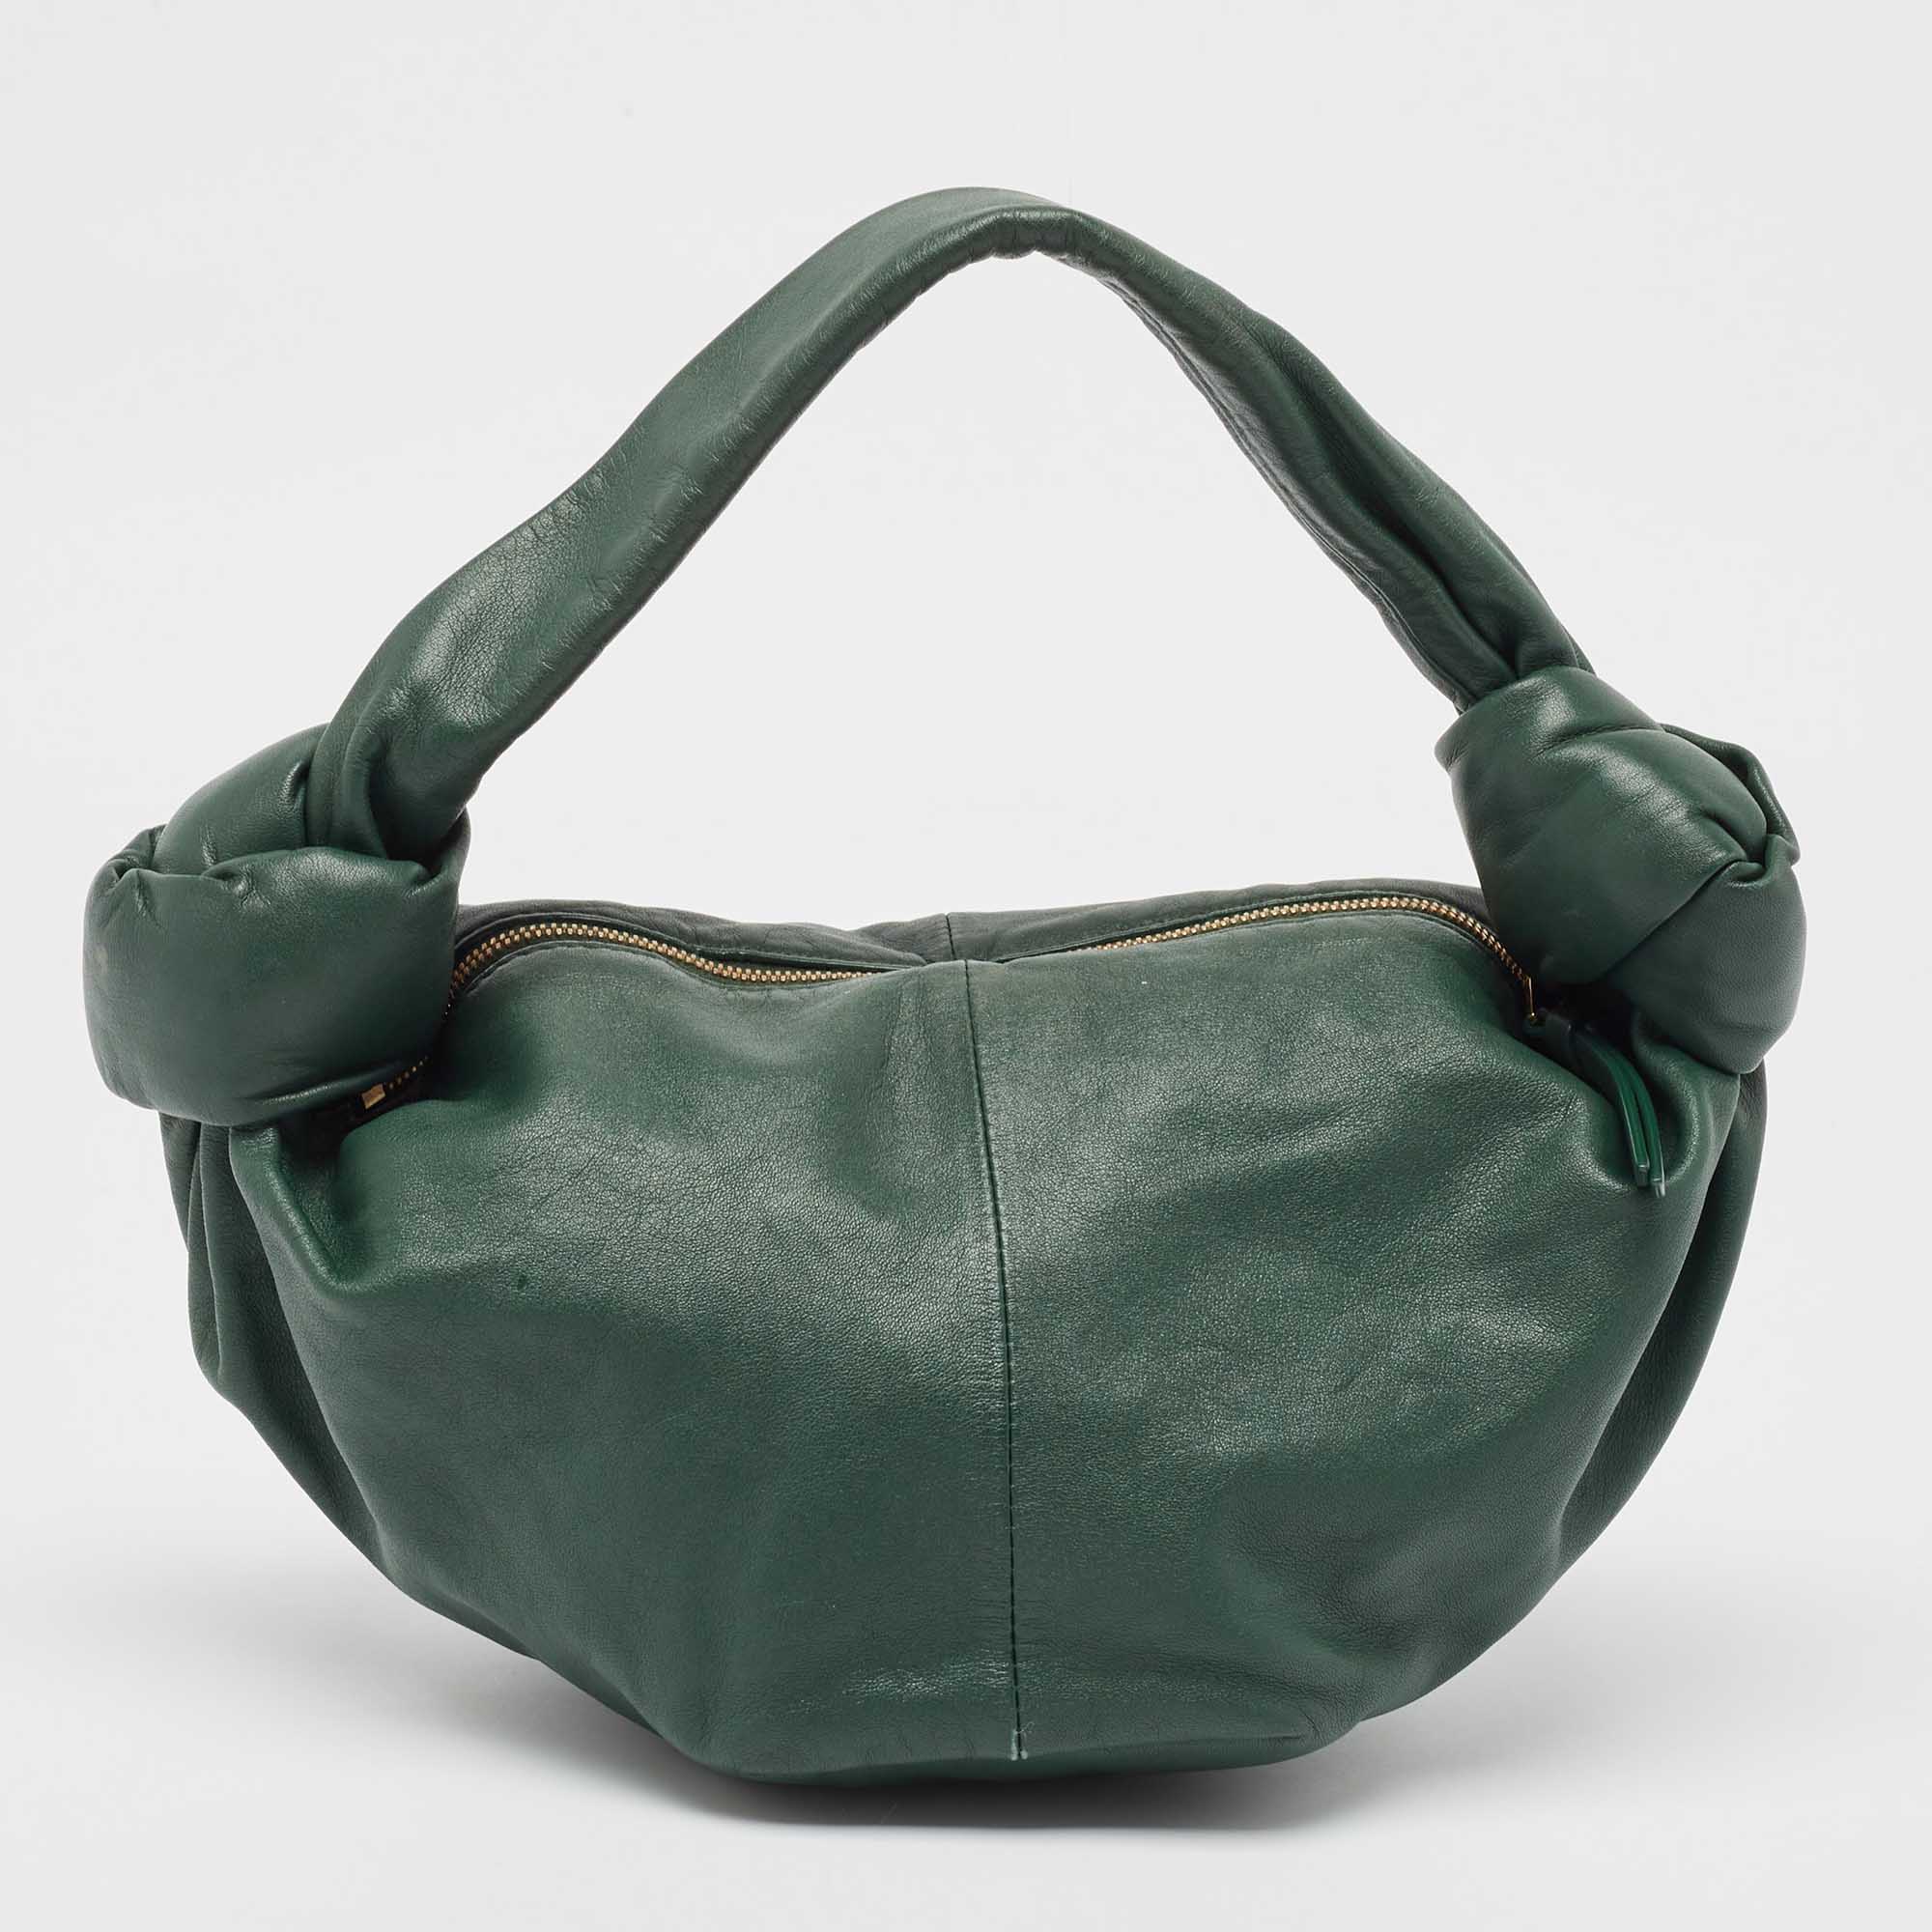 Bottega veneta dark green leather double knot bag